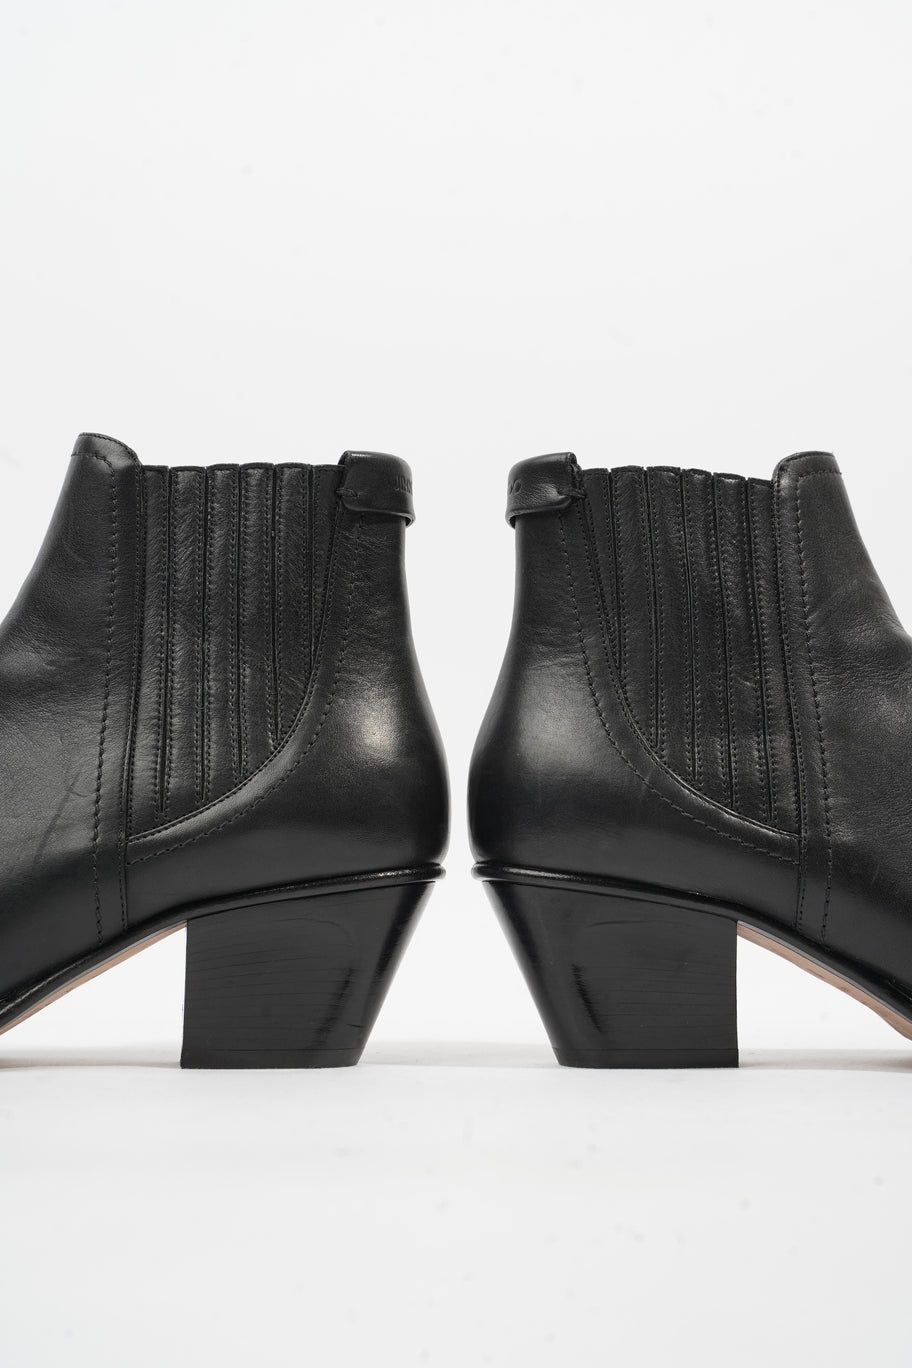 Square Toe Ankle Boots Black Leather EU 38 UK 5 Image 9